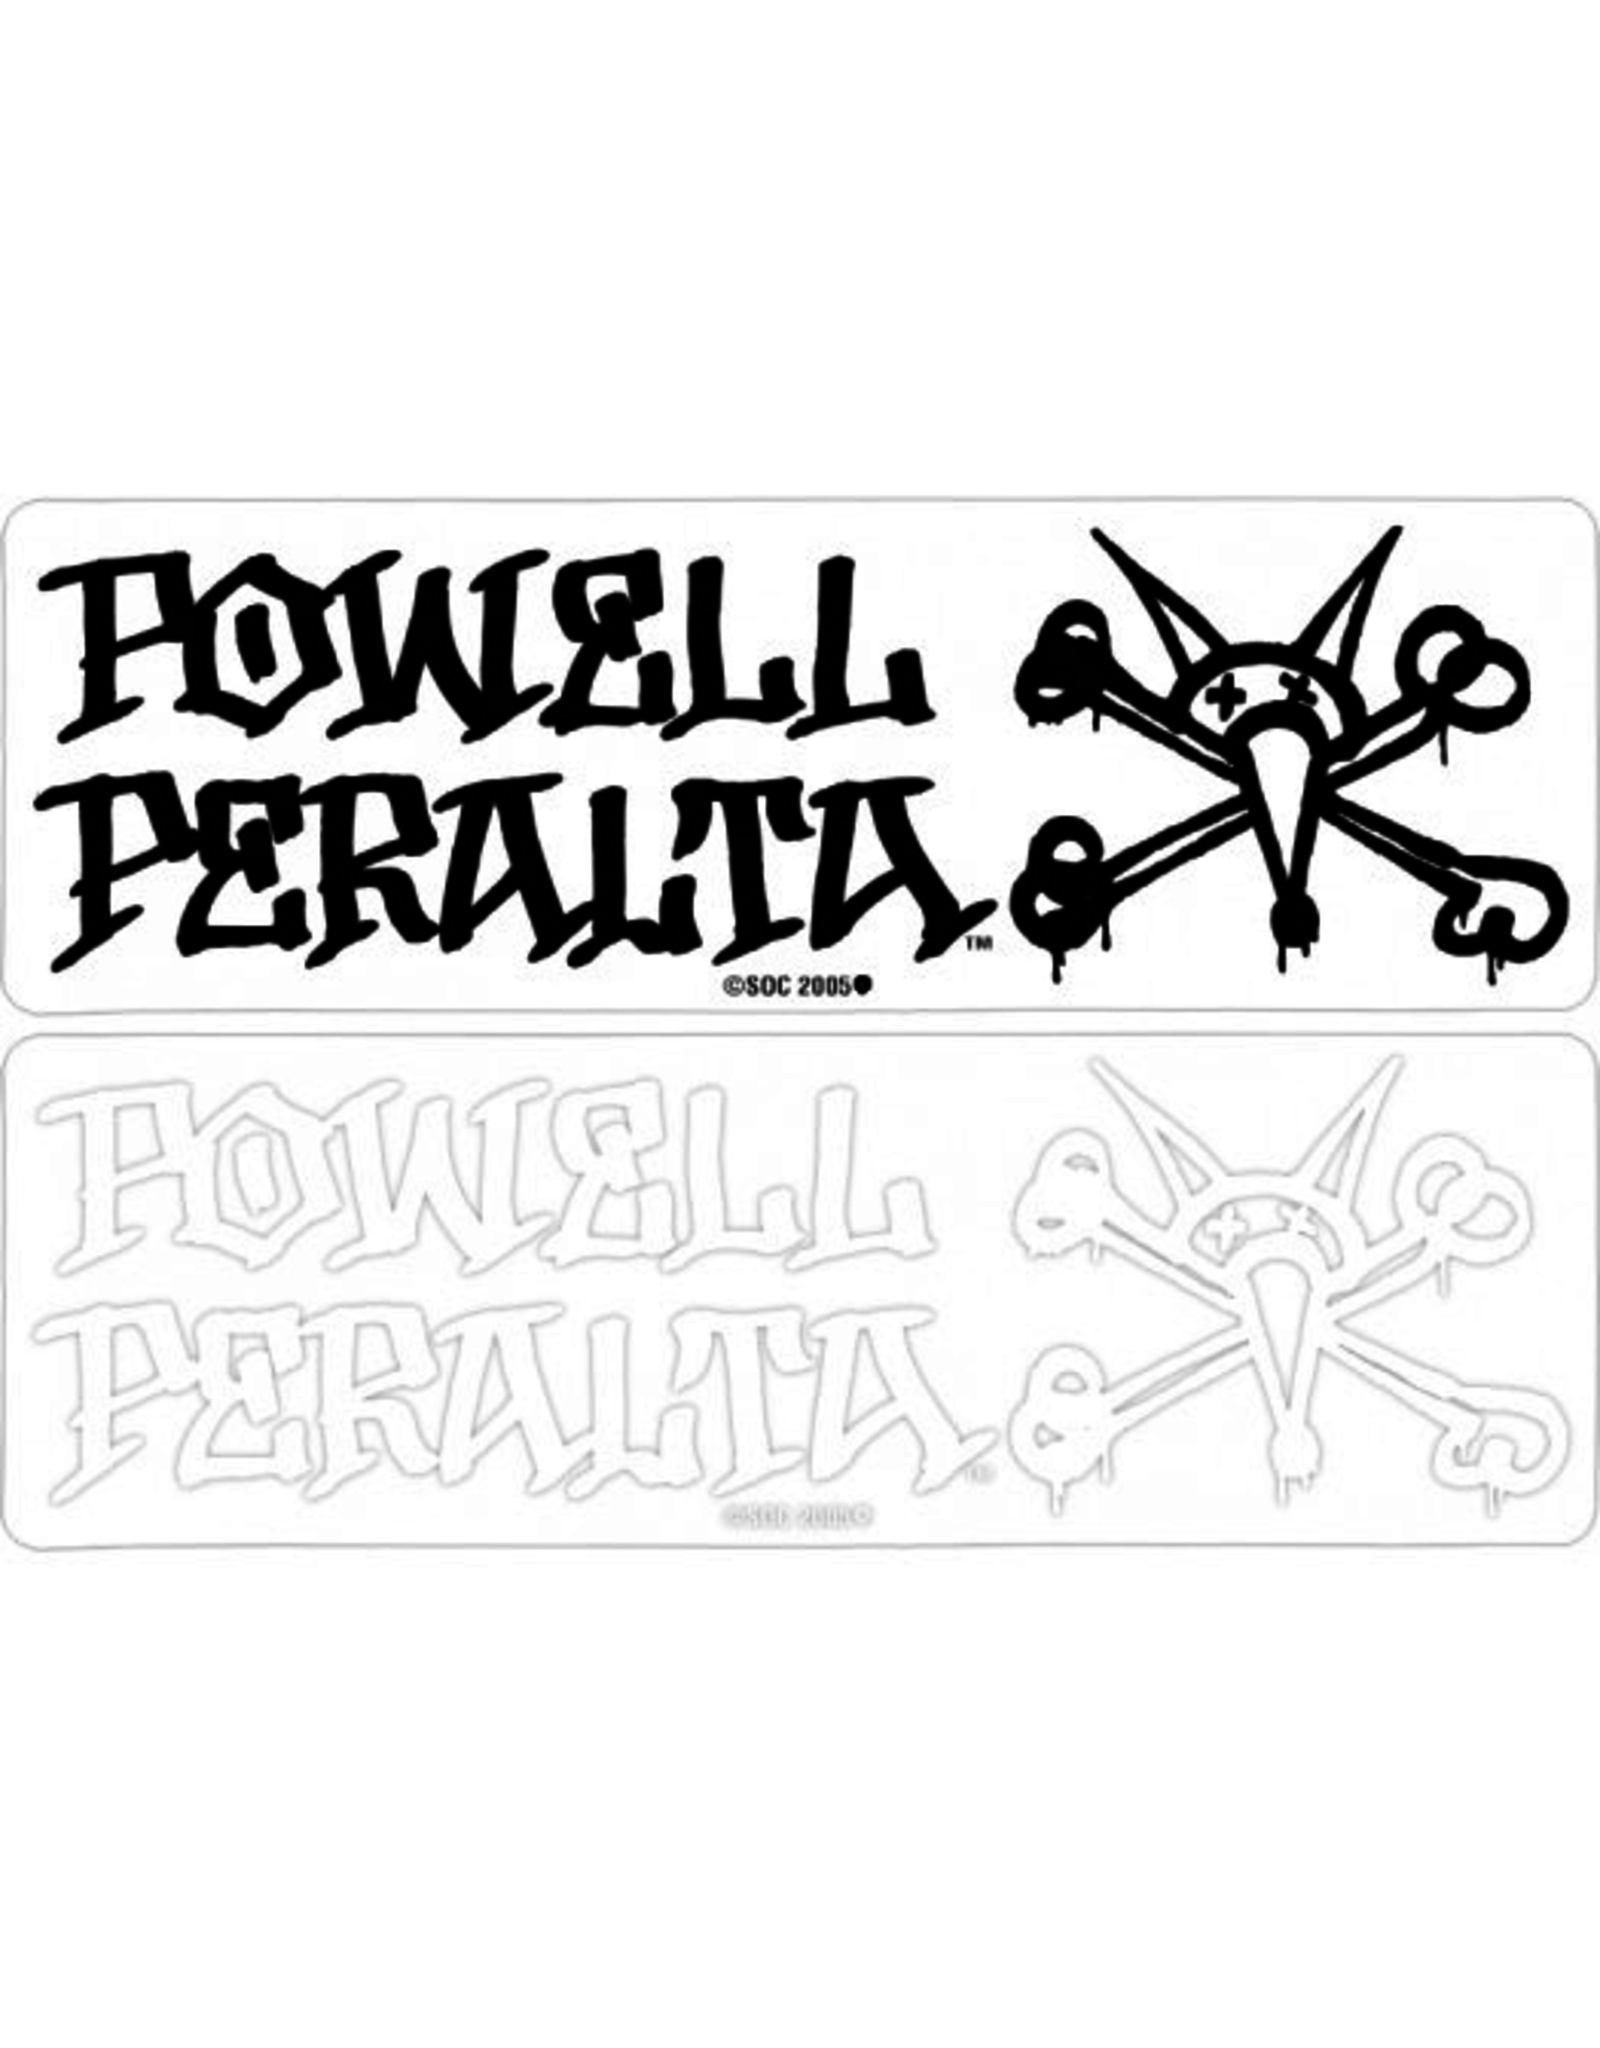 POWELL Powell Peralta Vato Rat Sticker